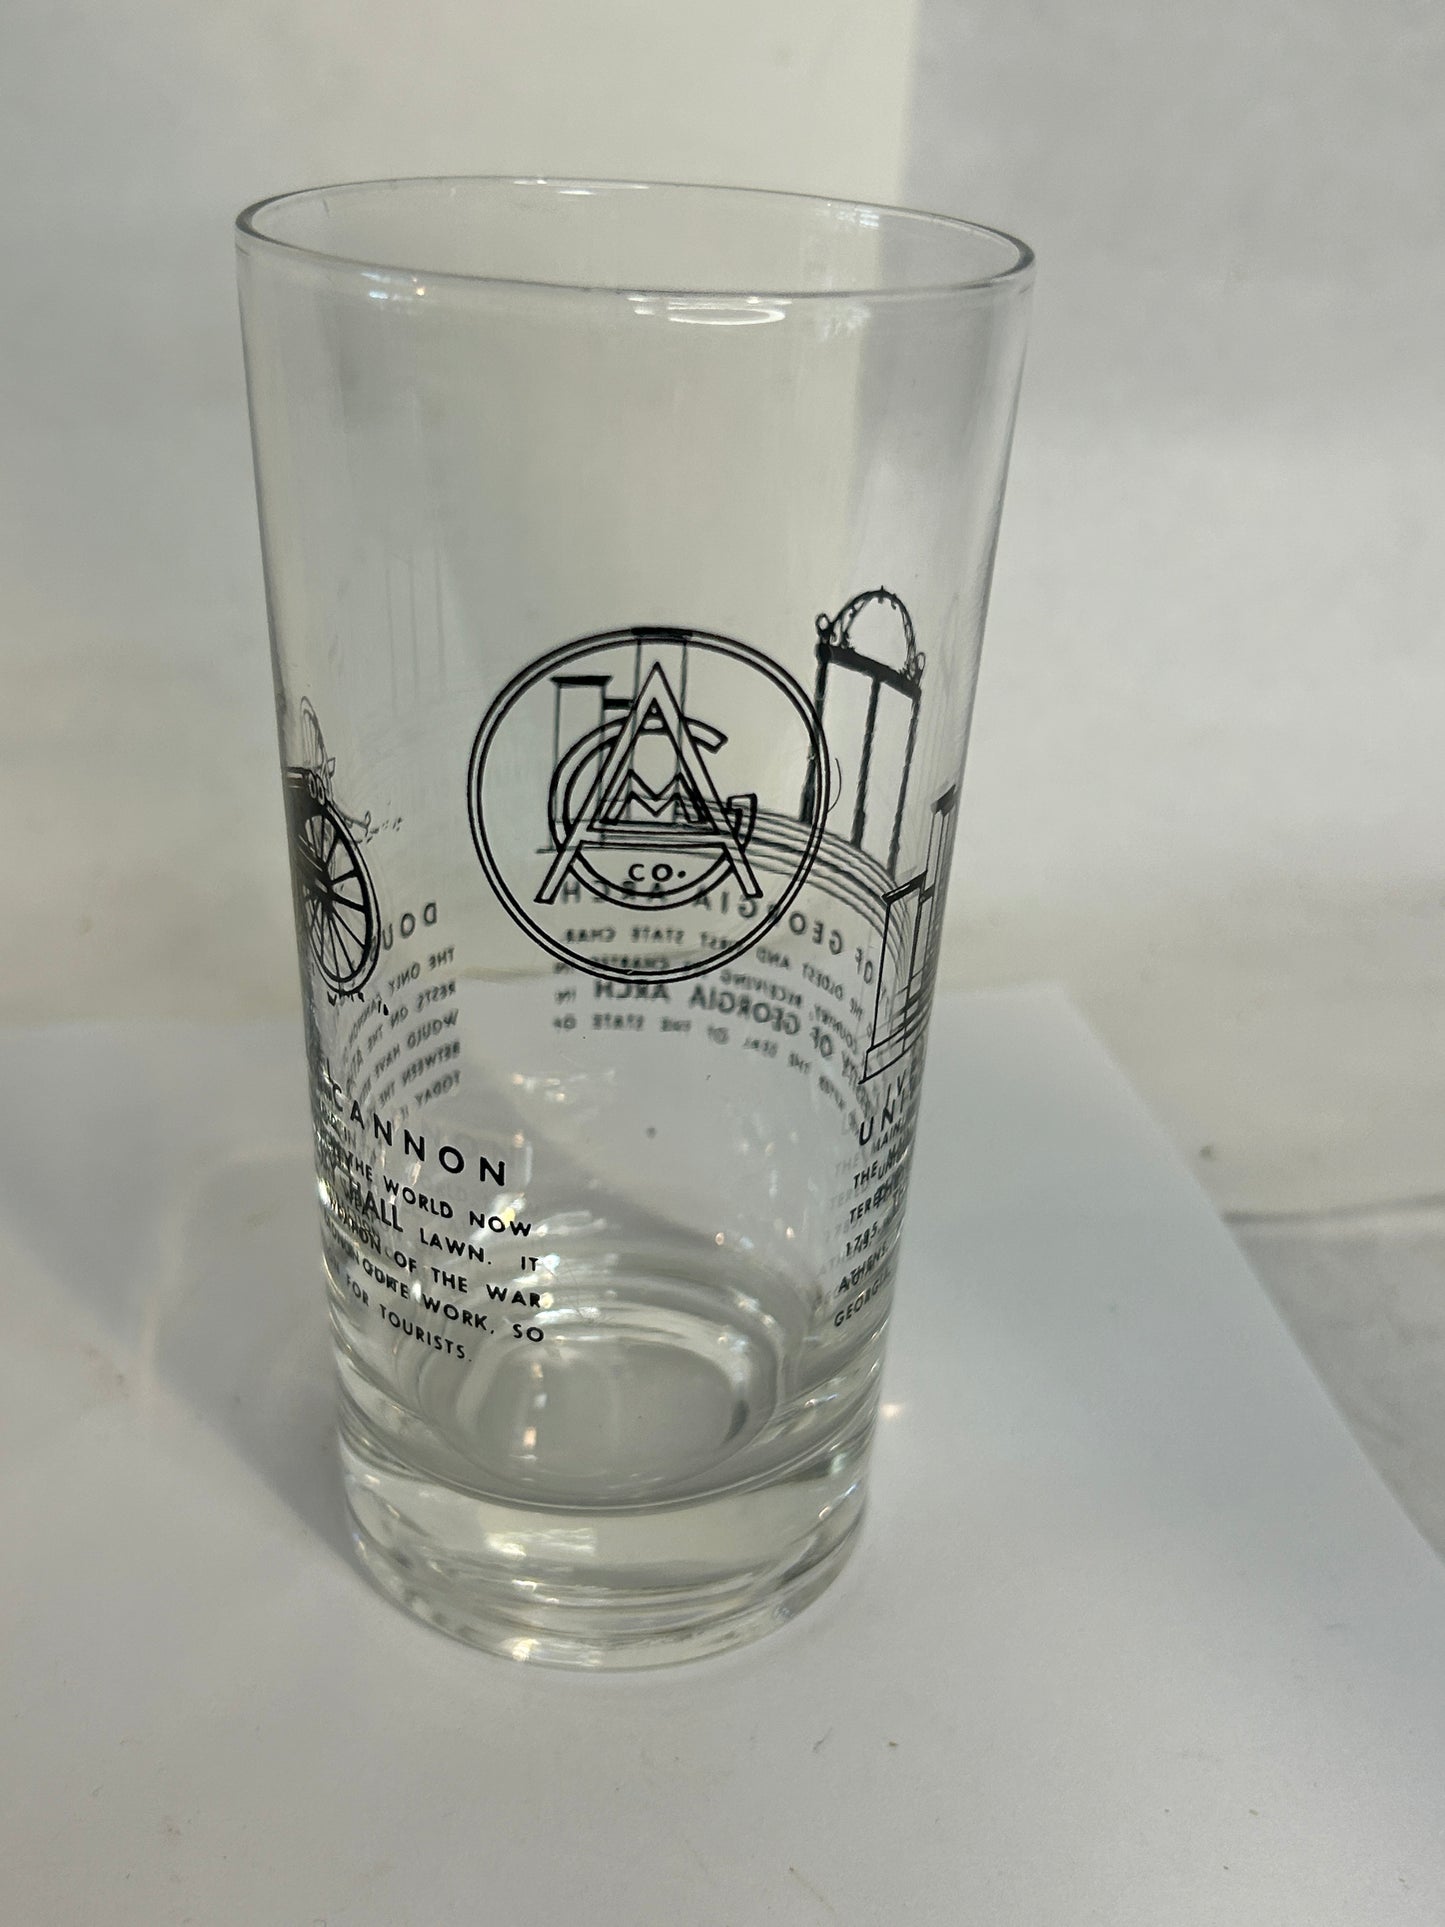 The University of Georgia Arch Commemorative Drinking Glass